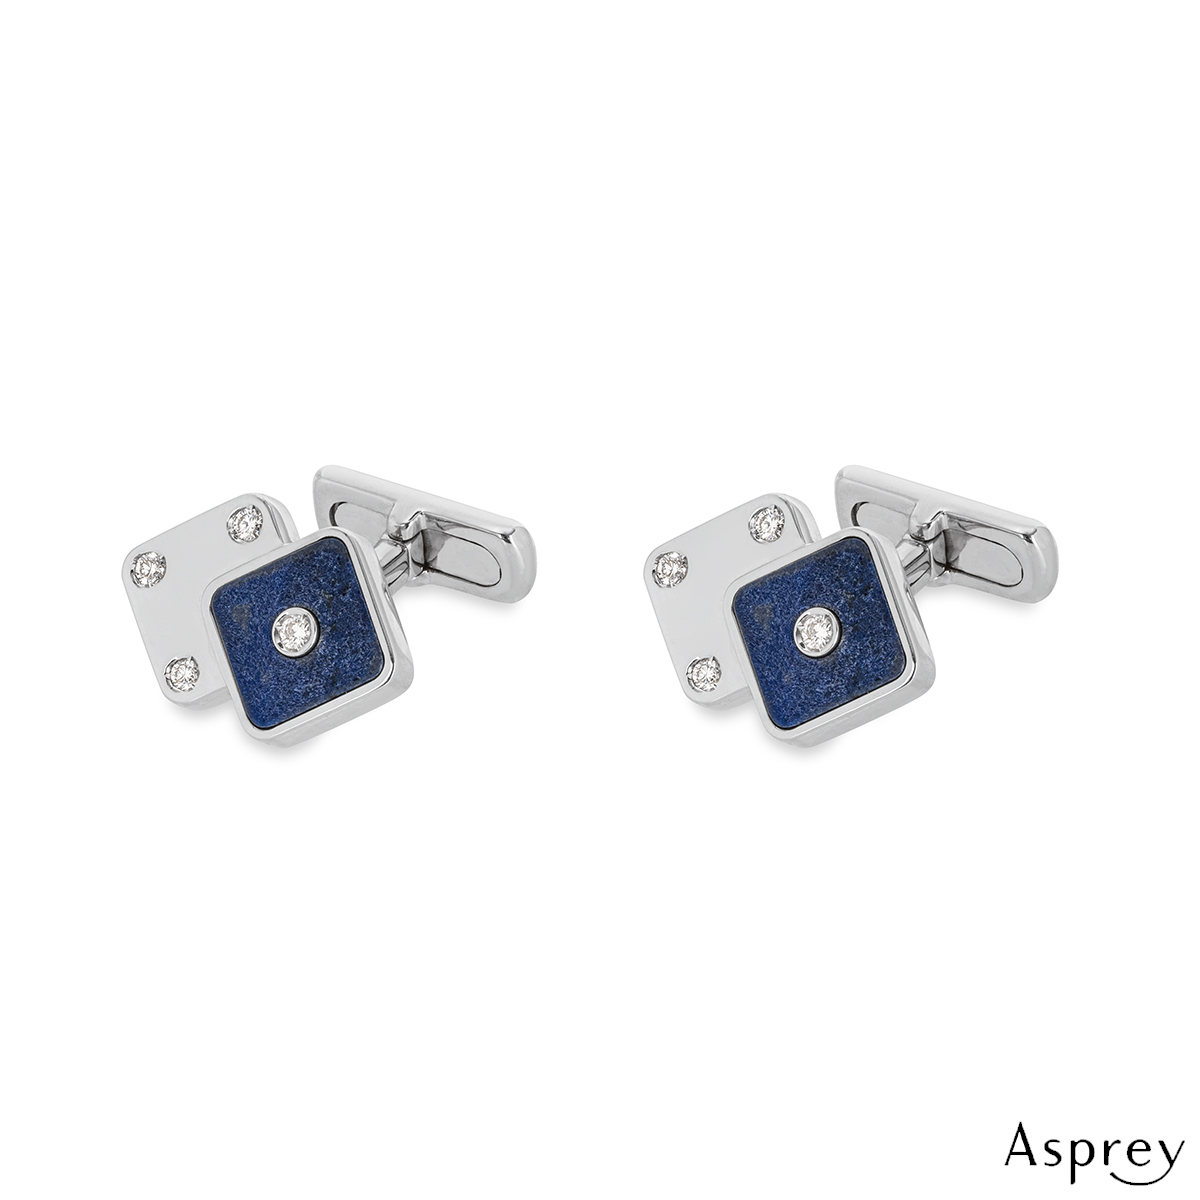 Asprey White Gold Lapis Lazuli & Diamond Cufflinks